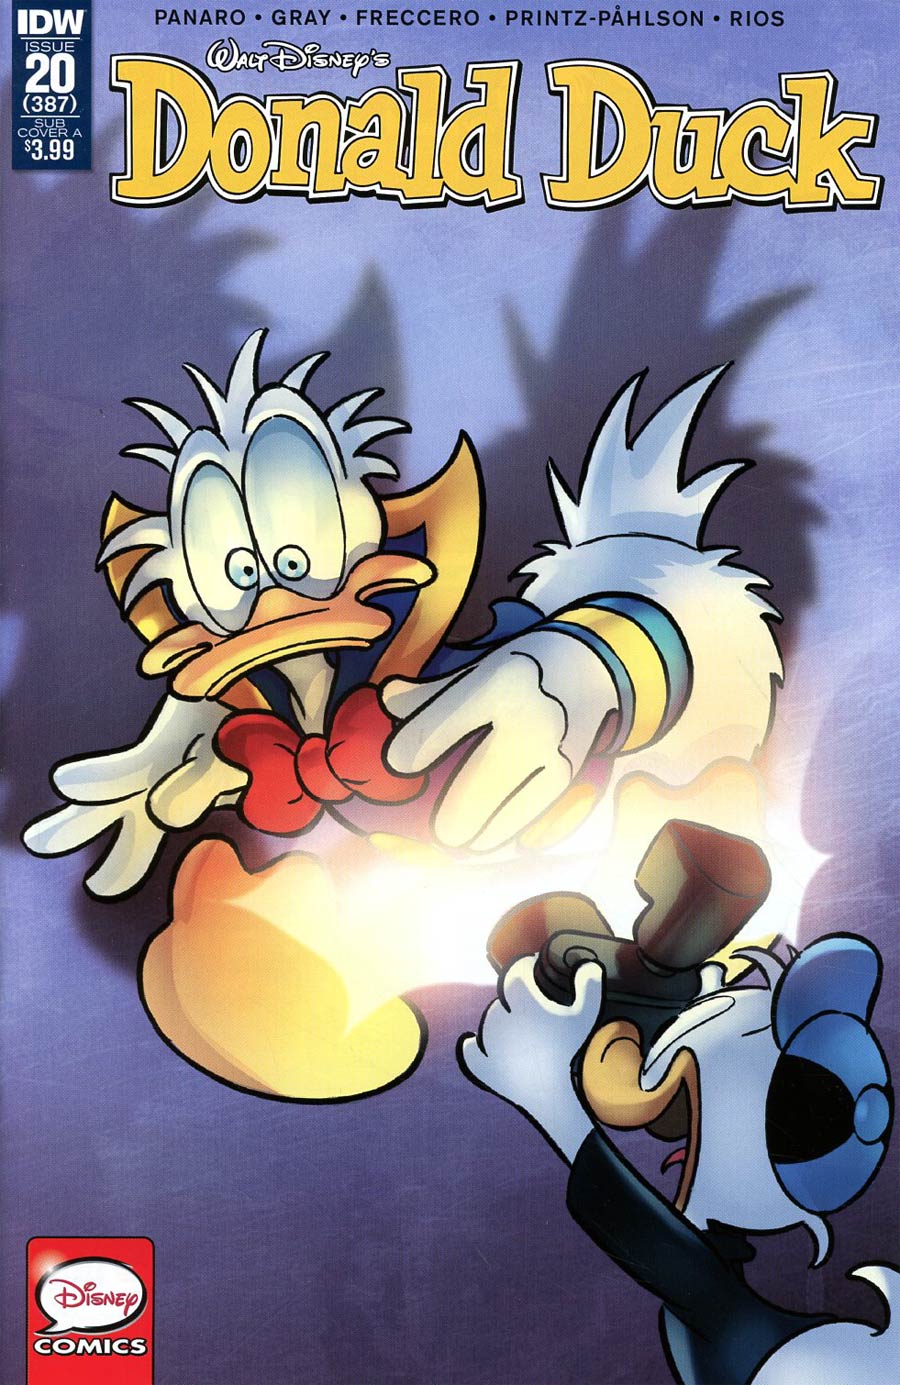 Donald Duck Vol 2 #20 Cover B Variant Andrea Freccero Subscription Cover